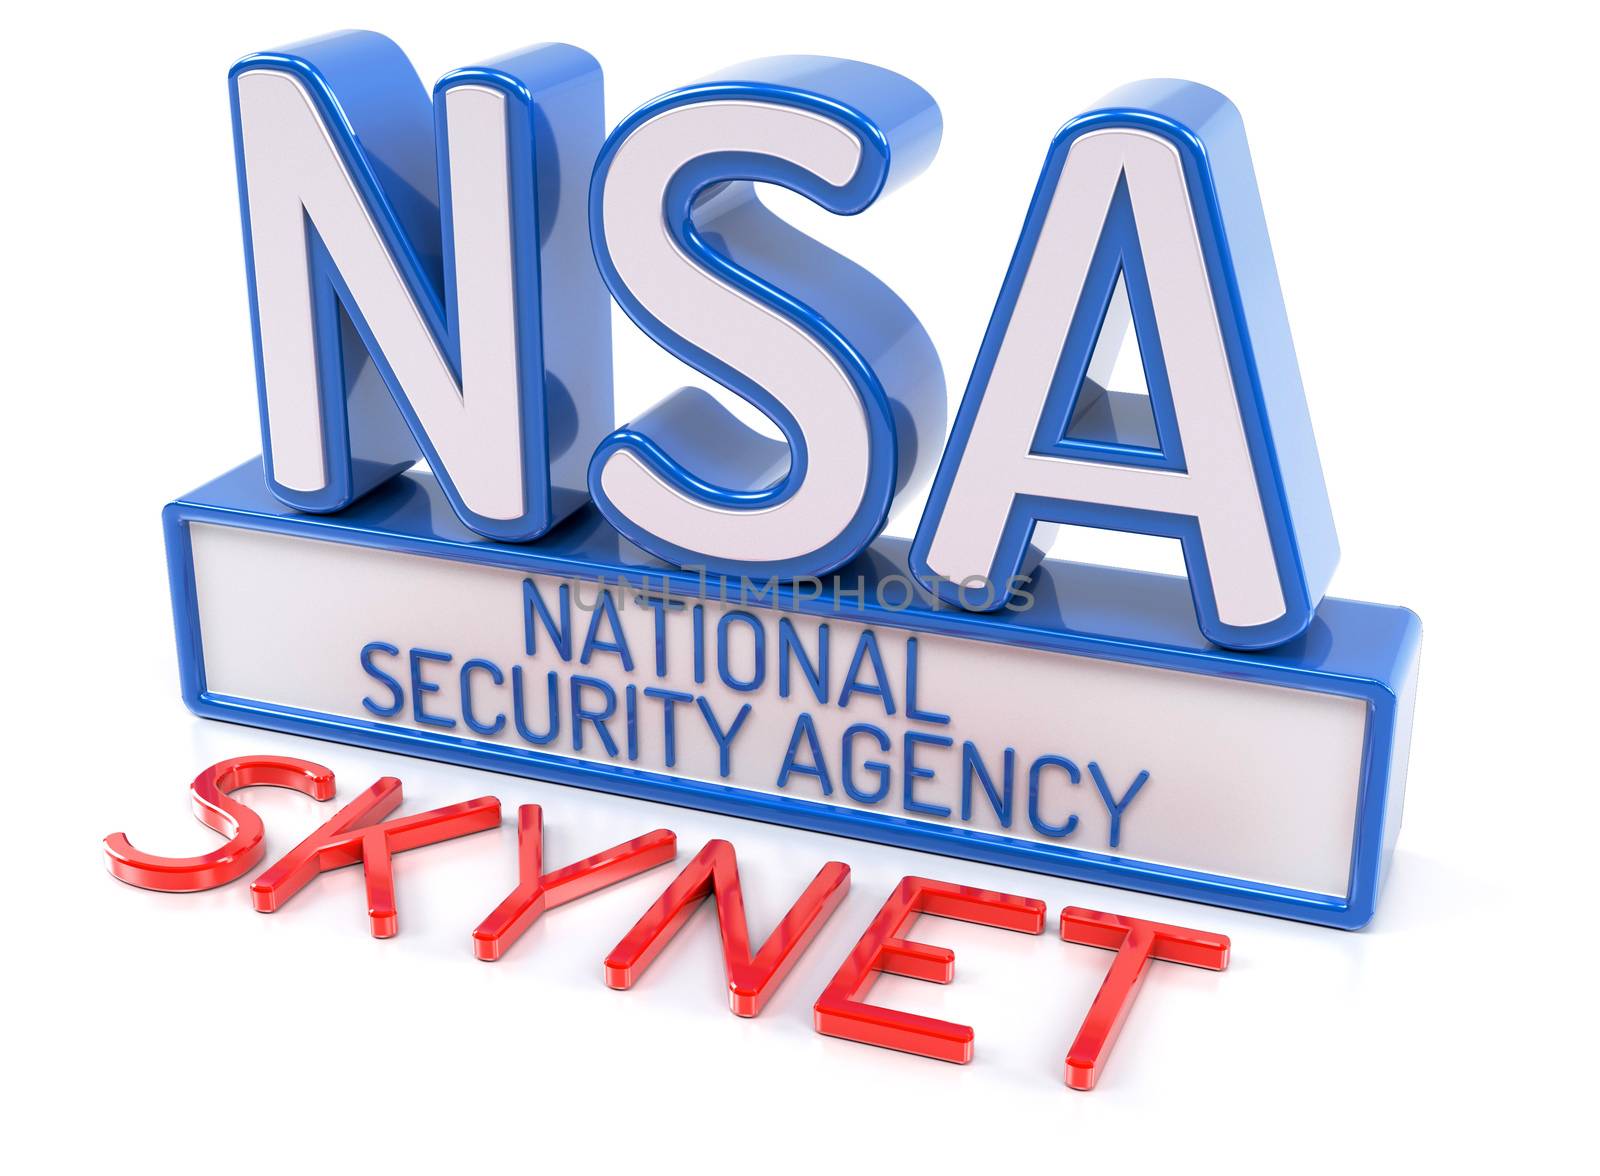 NSA SKYNET - National Security Agency